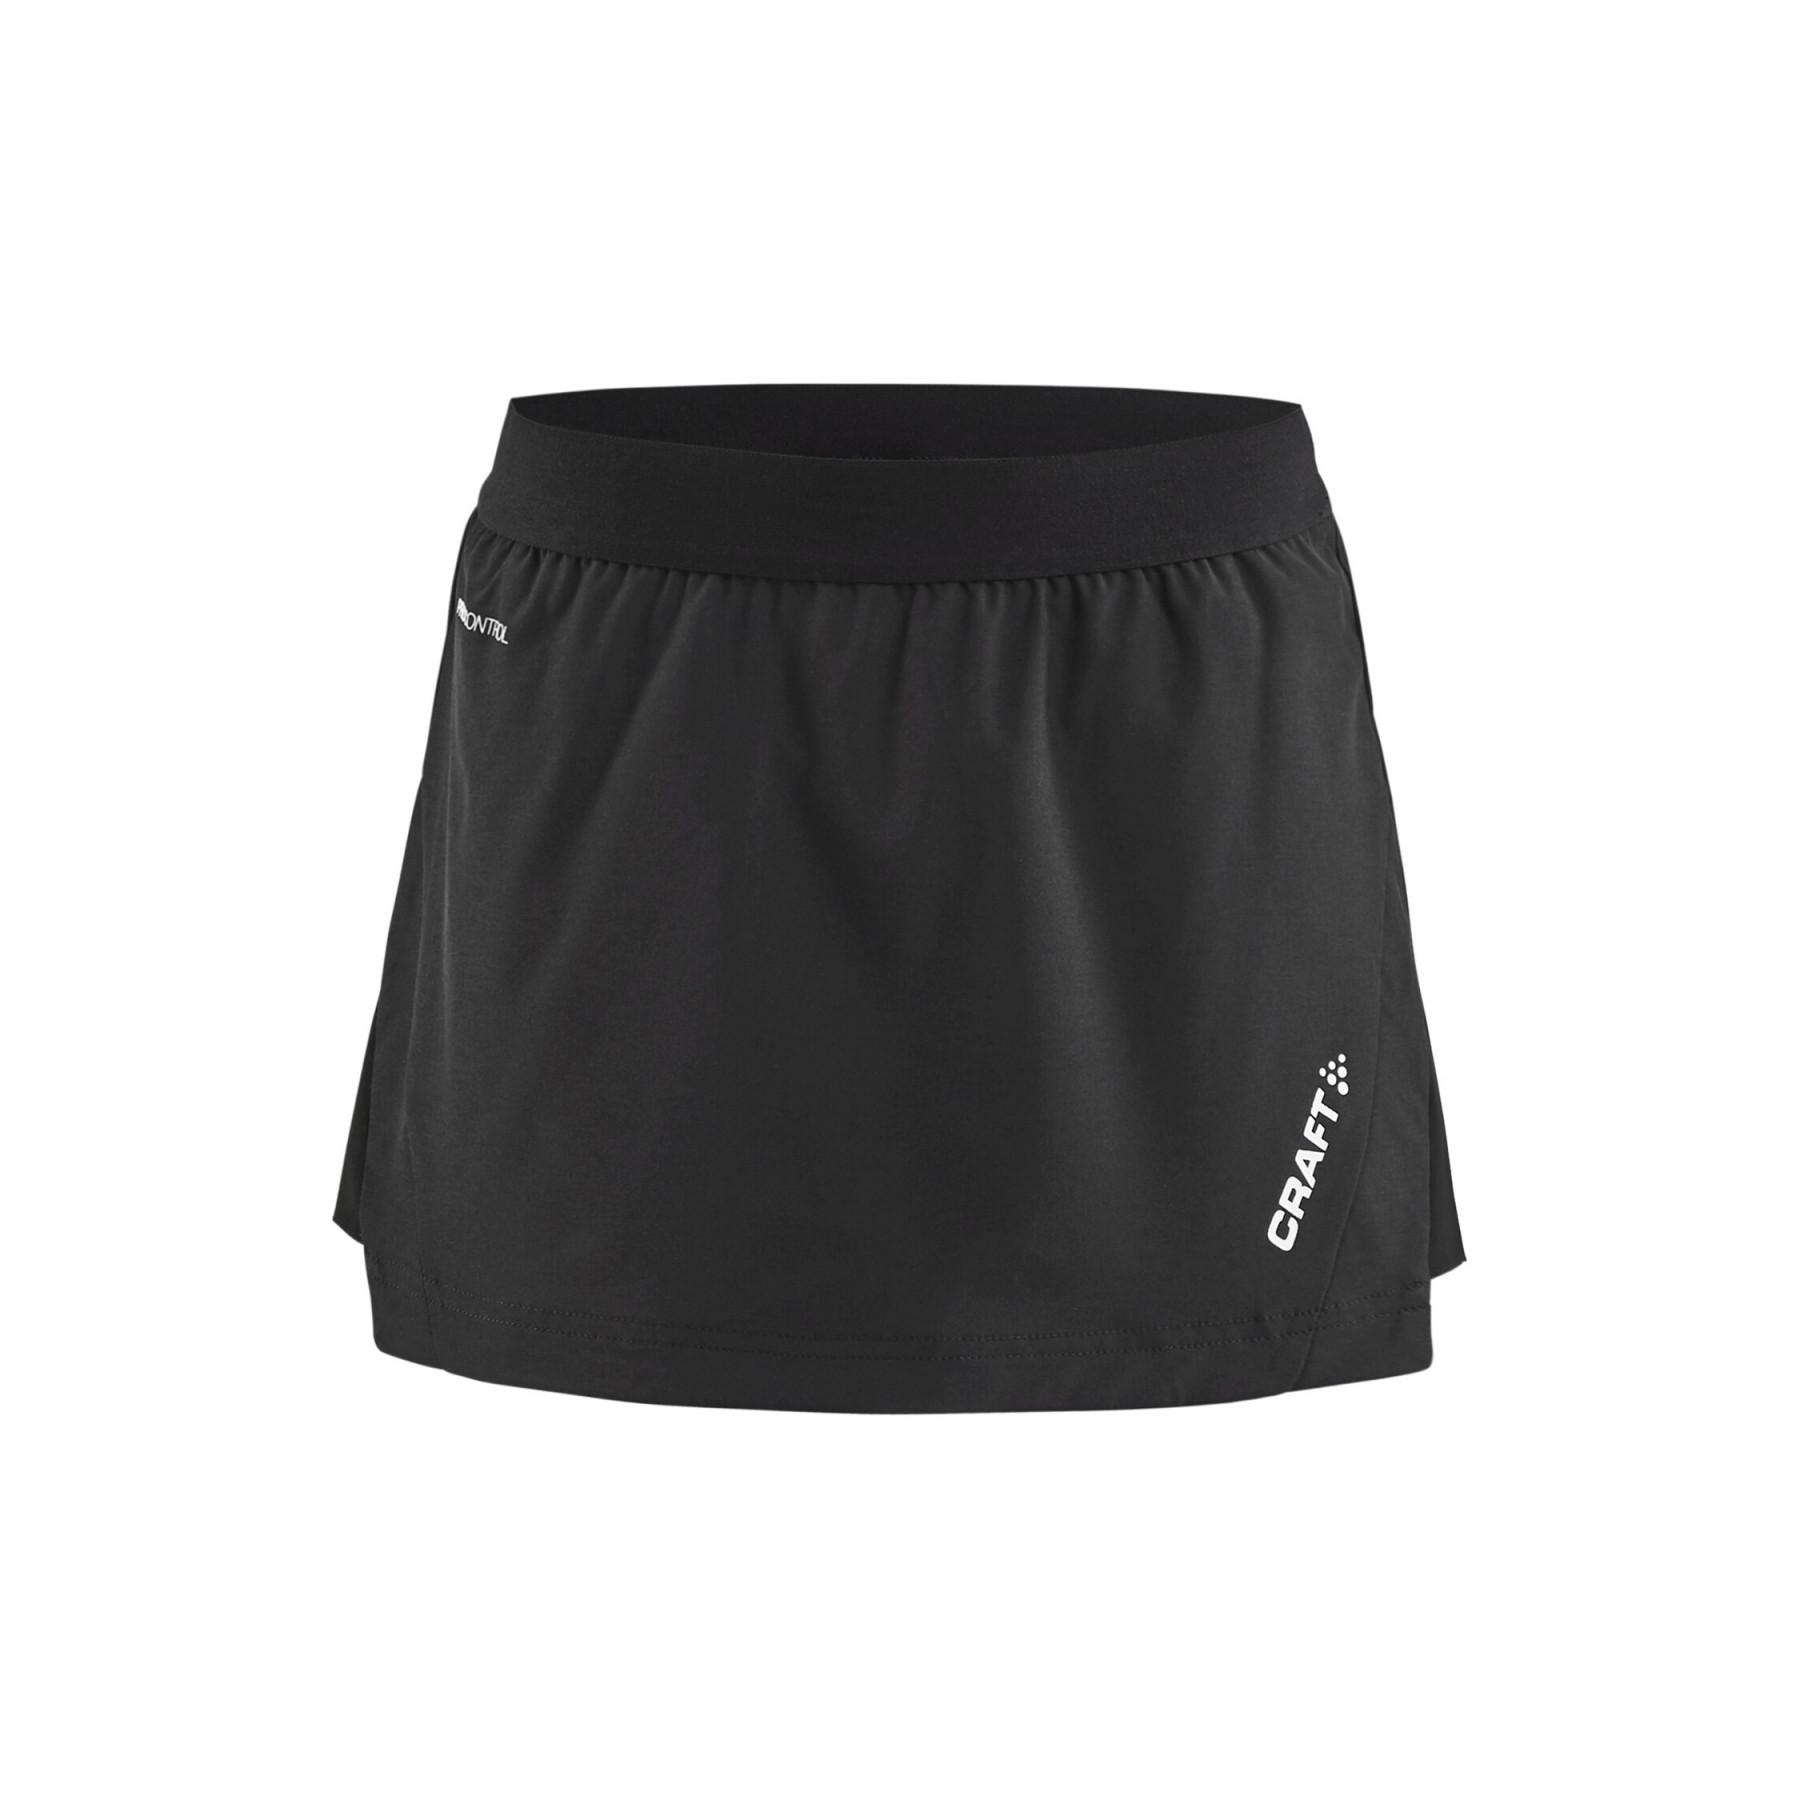 Skirt Craft pro control impact - Junior's wear - Handball wear